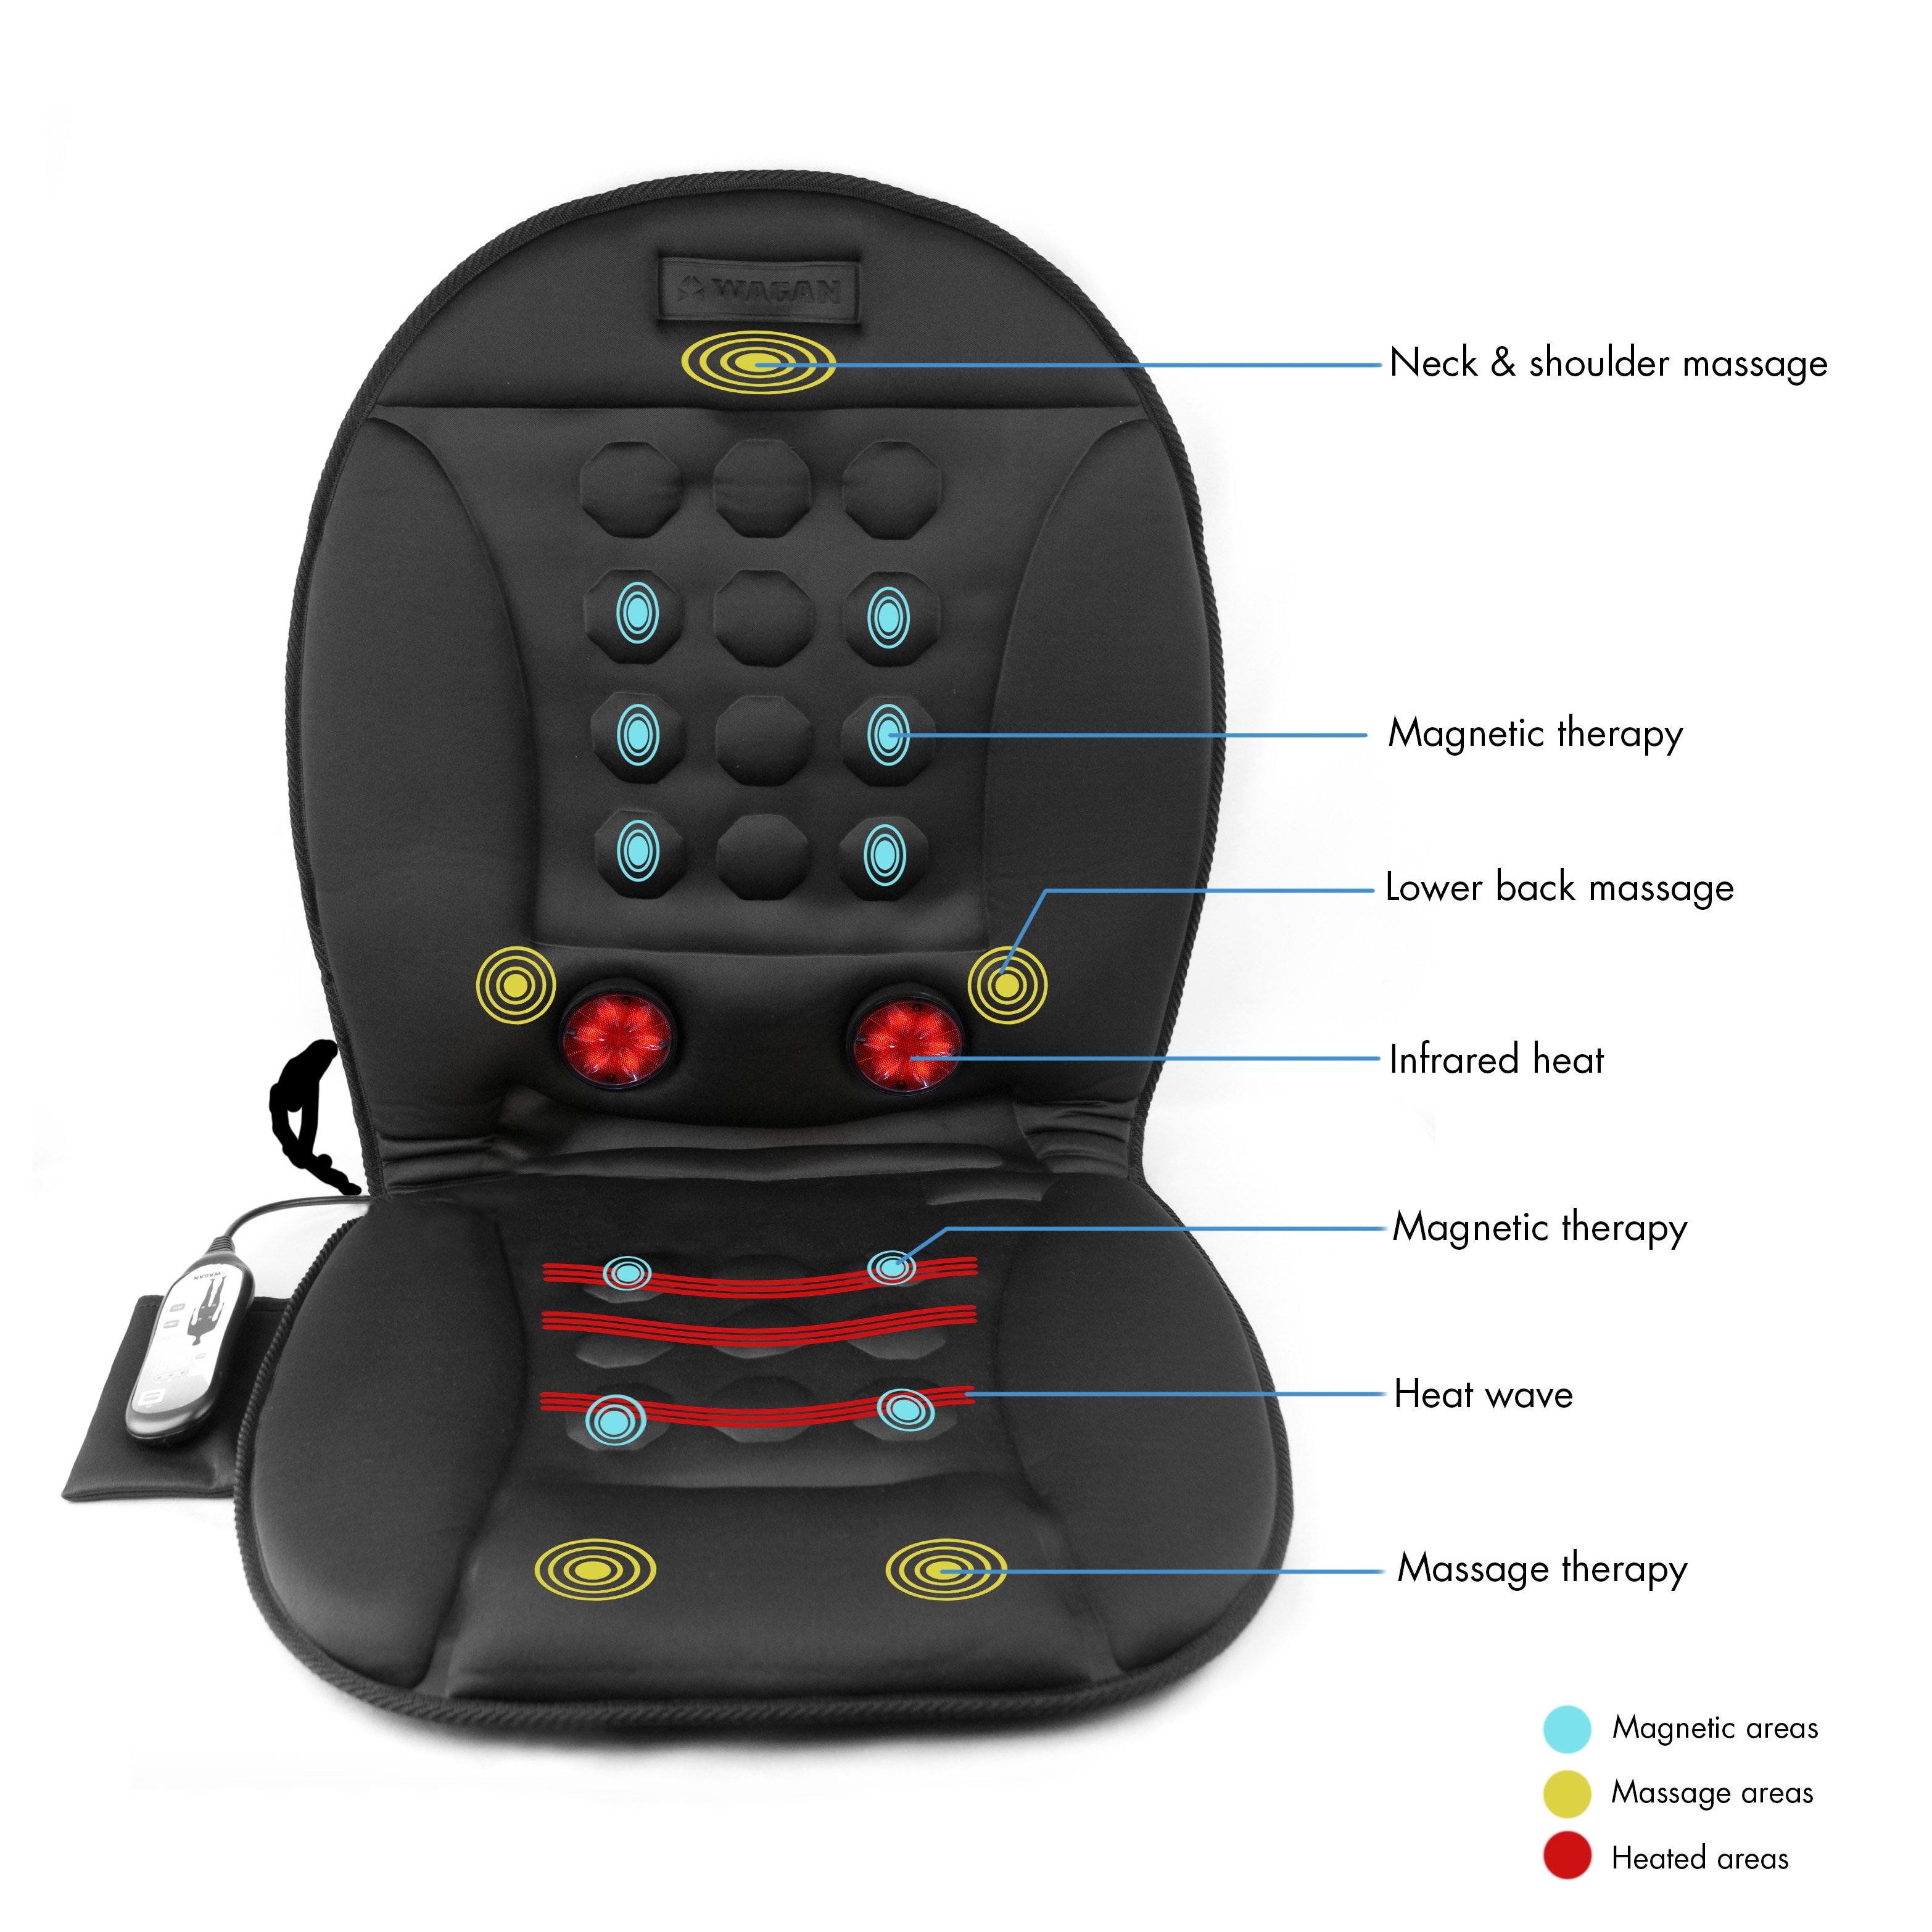 Massage car. Magnetic Infrared Heat Massager. Neck & back massage Cushion. Infrared foot Massager with Remote Control. Overtaking sensor Seat vibrate.